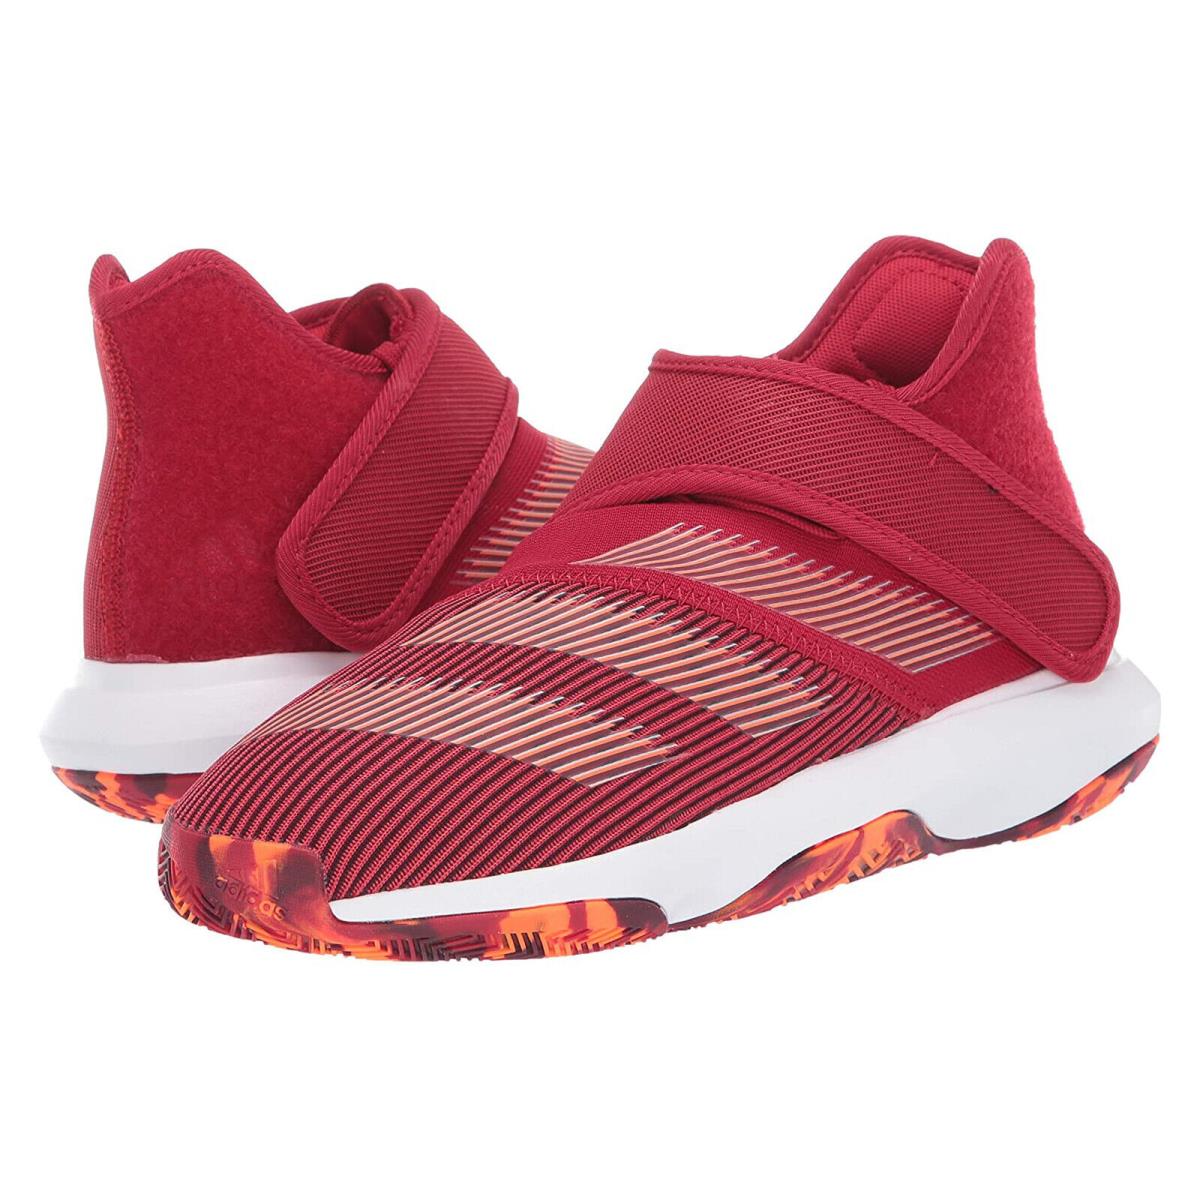 Adidas Boys Harden B/e 3 J Basketball Shoes Power Red Orange EF3602 Size 5.5 - Red , Power Red/White/Solar Orange Manufacturer